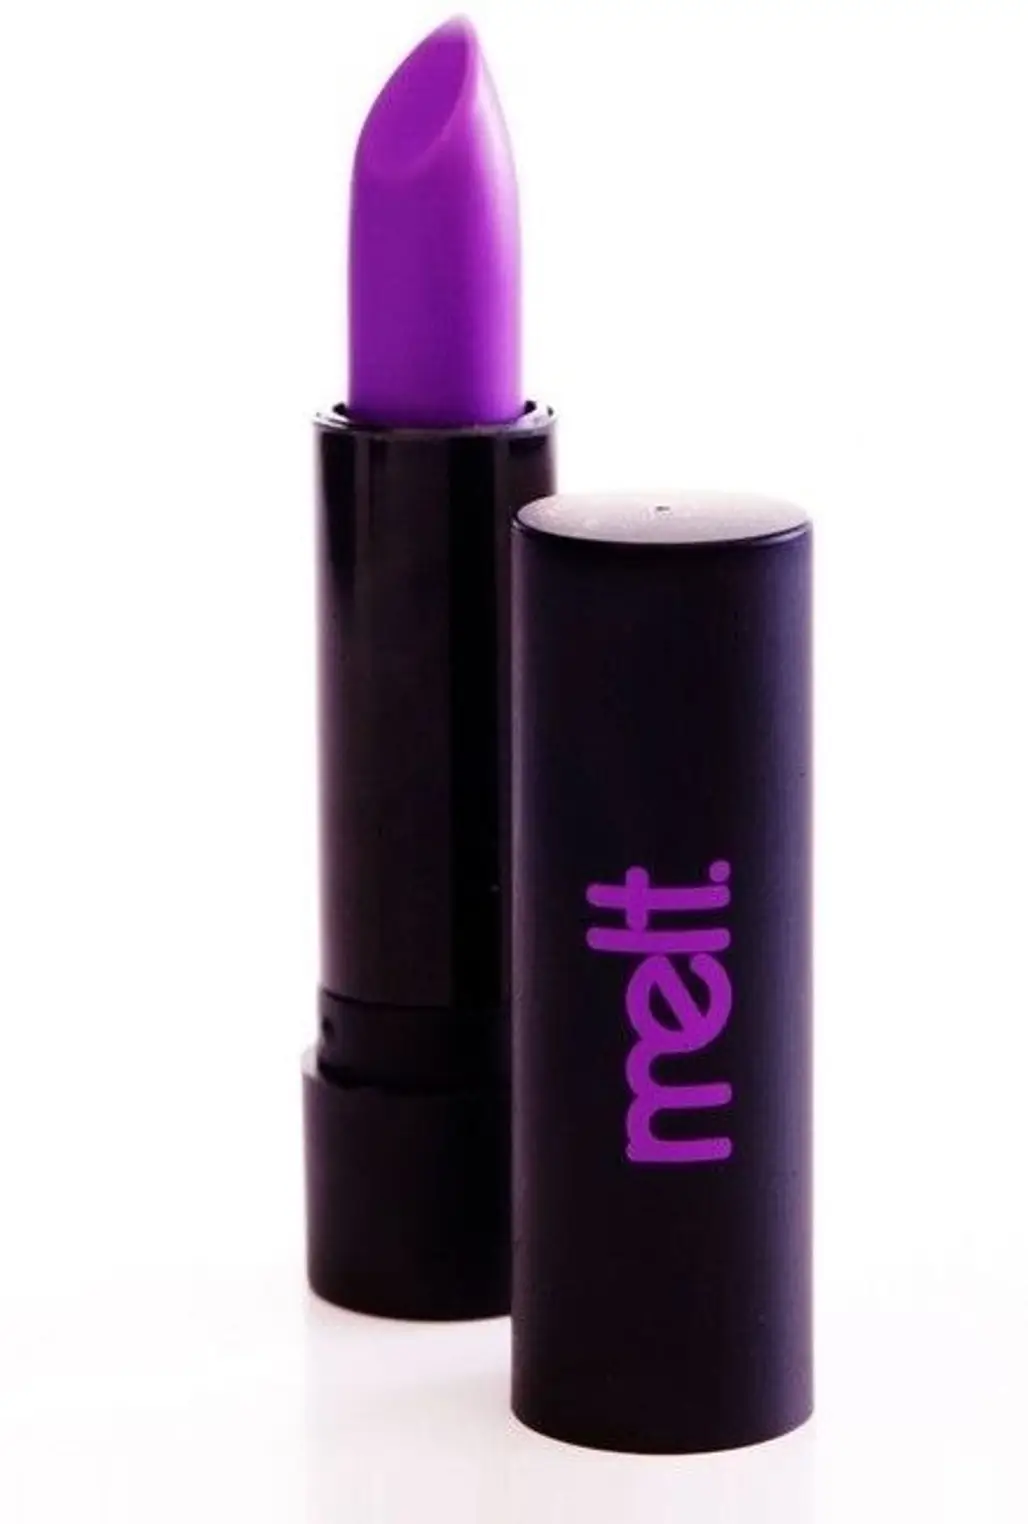 Melt Cosmetics – Ultra-Matte Lipstick in by Starlight